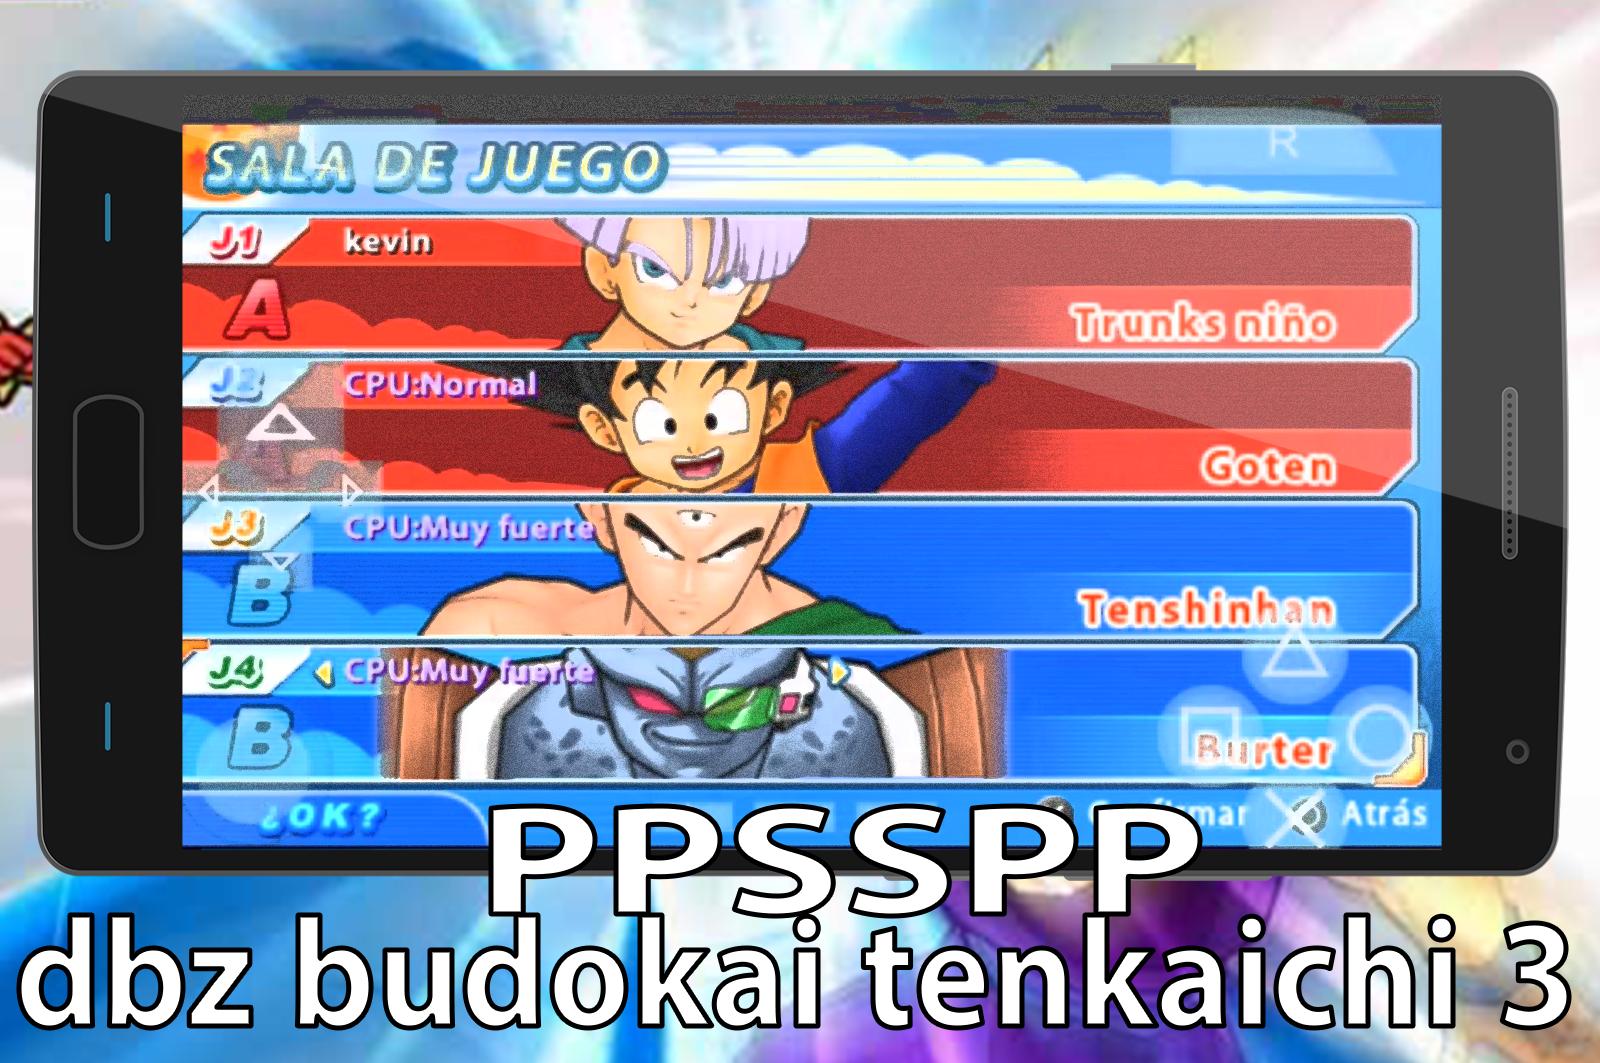 Guide Dragon Ball Z Budokai Tenkaichi 3 of PPSSPP APK pour Android  Télécharger